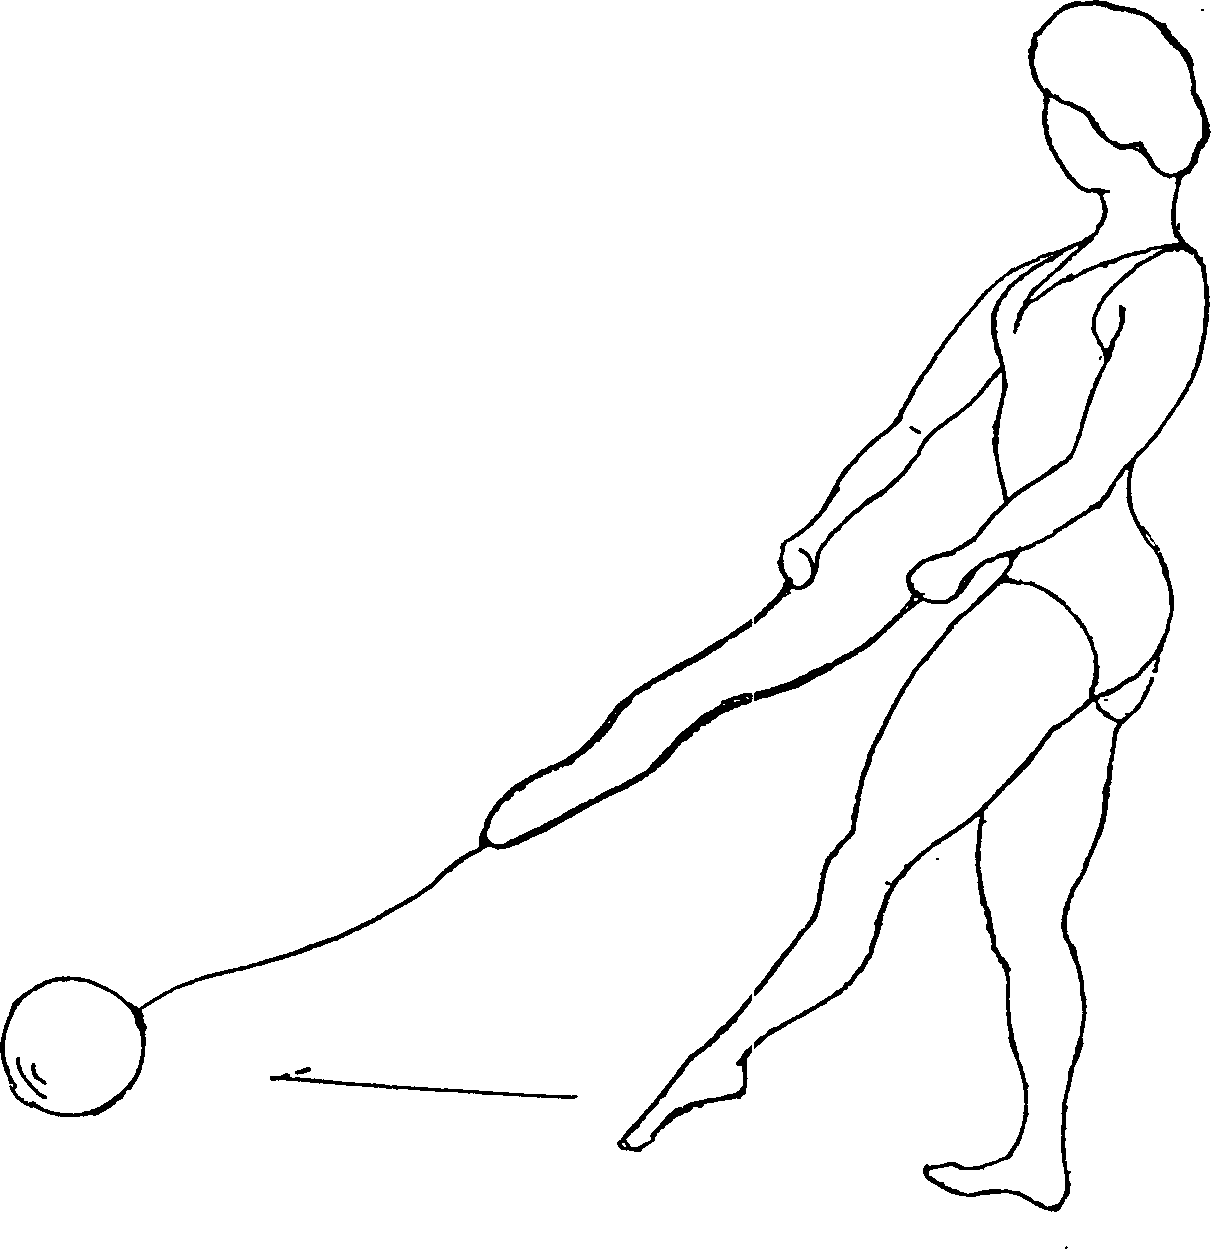 Free-kick ball